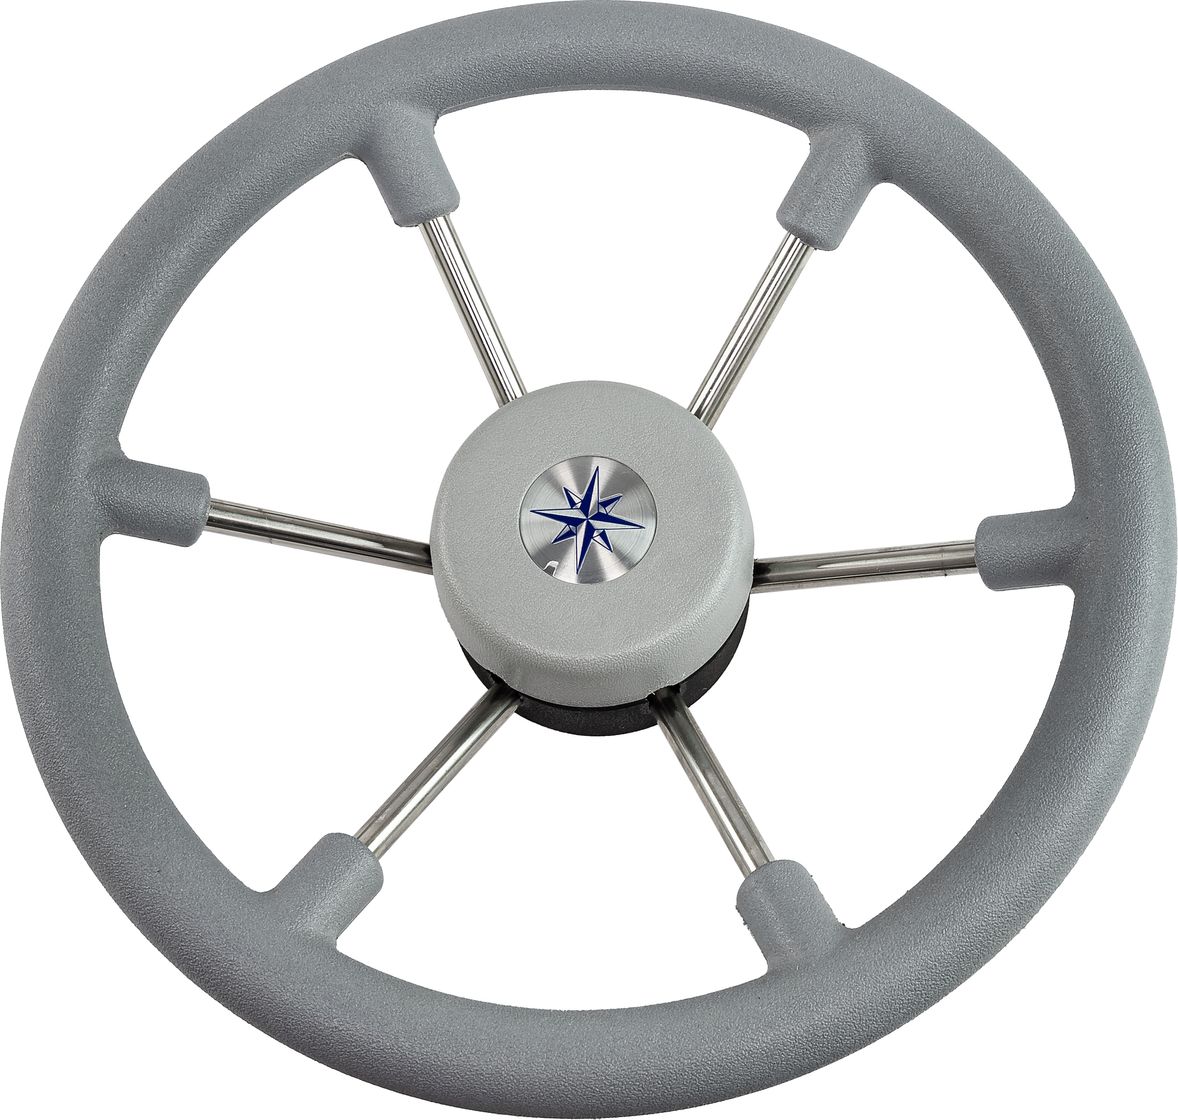 Рулевое колесо LEADER TANEGUM серый обод серебряные спицы д. 330 мм VN7330-03 рулевое колесо leader plast обод серебряные спицы д 330 мм vn8330 01